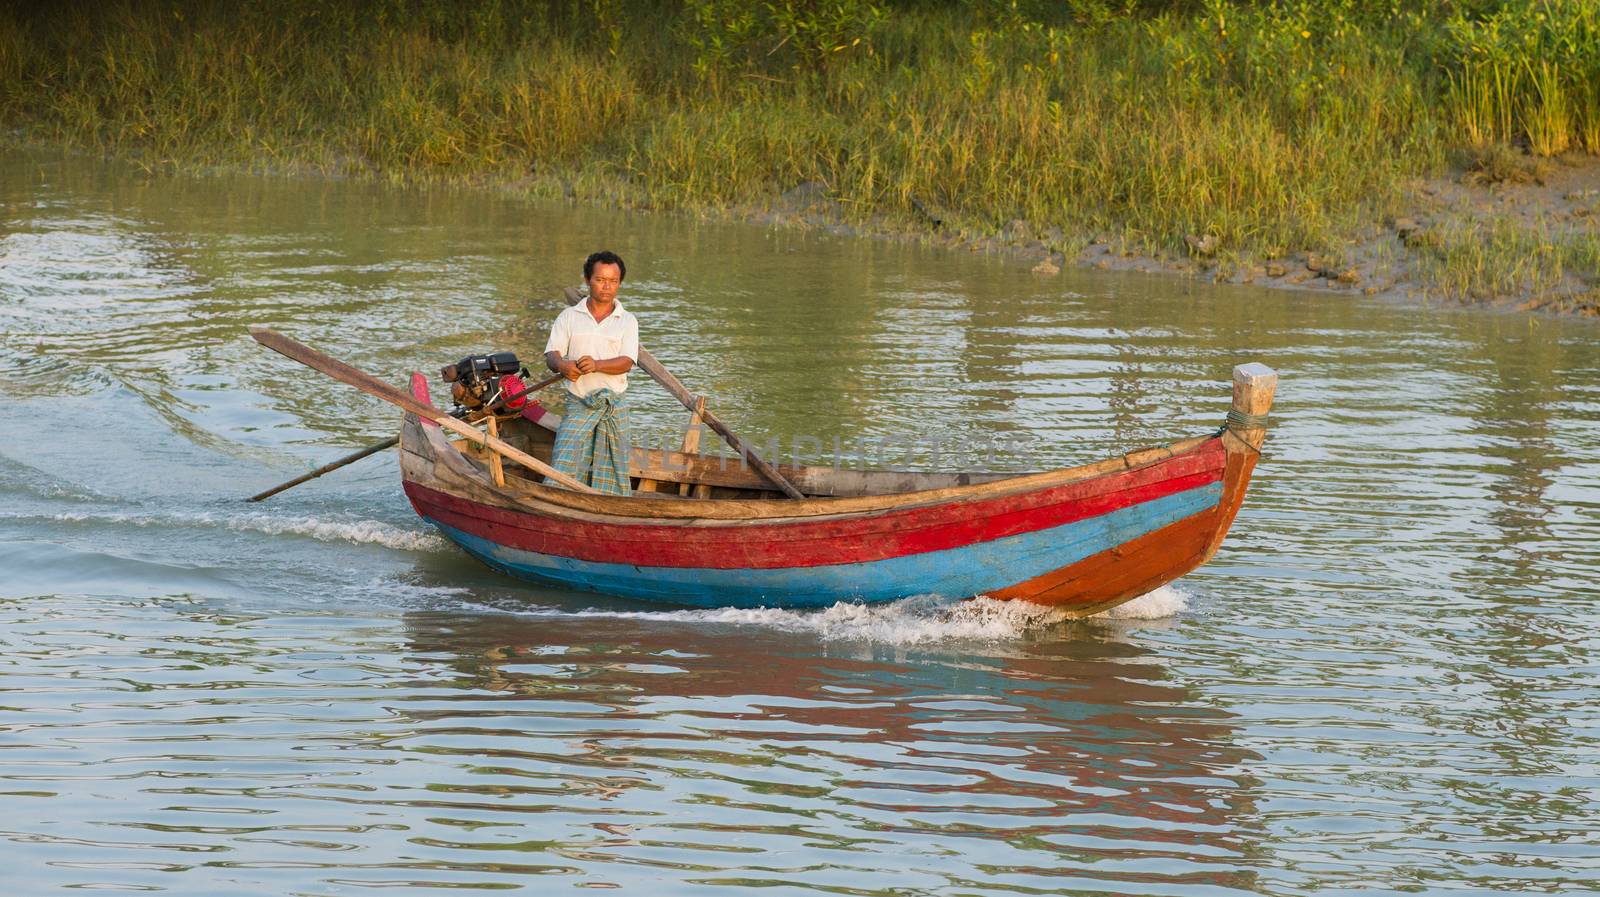 Sittwe, Rakhine State, Myanmar - October 16, 2014: Man navigating his motorboat on a canal near Sittwe, the capital of the Rakhine State in Myanmar.